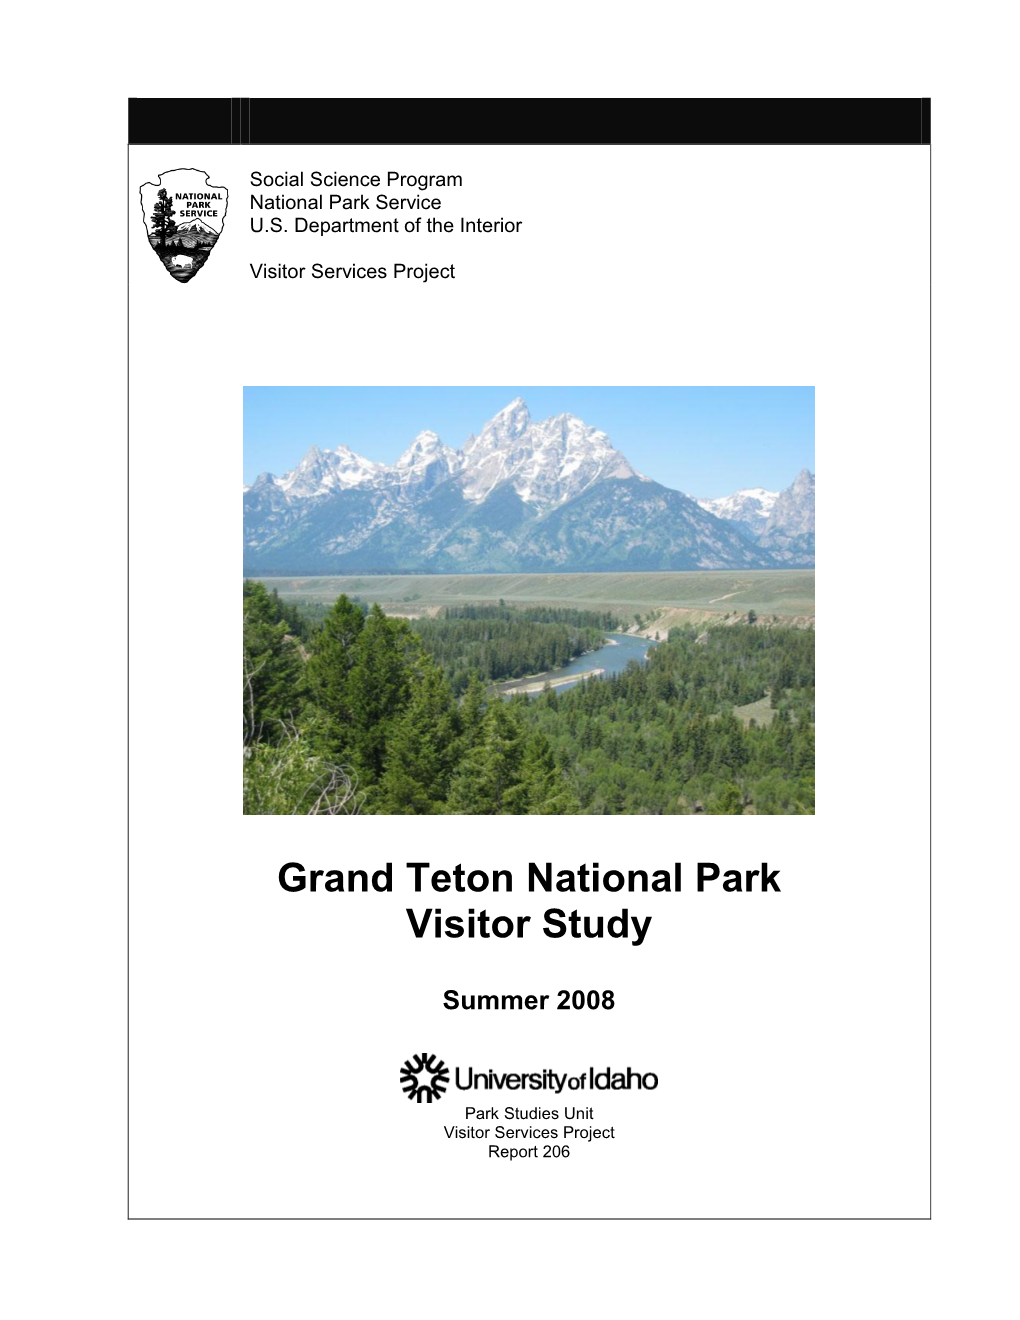 Grand Teton National Park Visitor Study